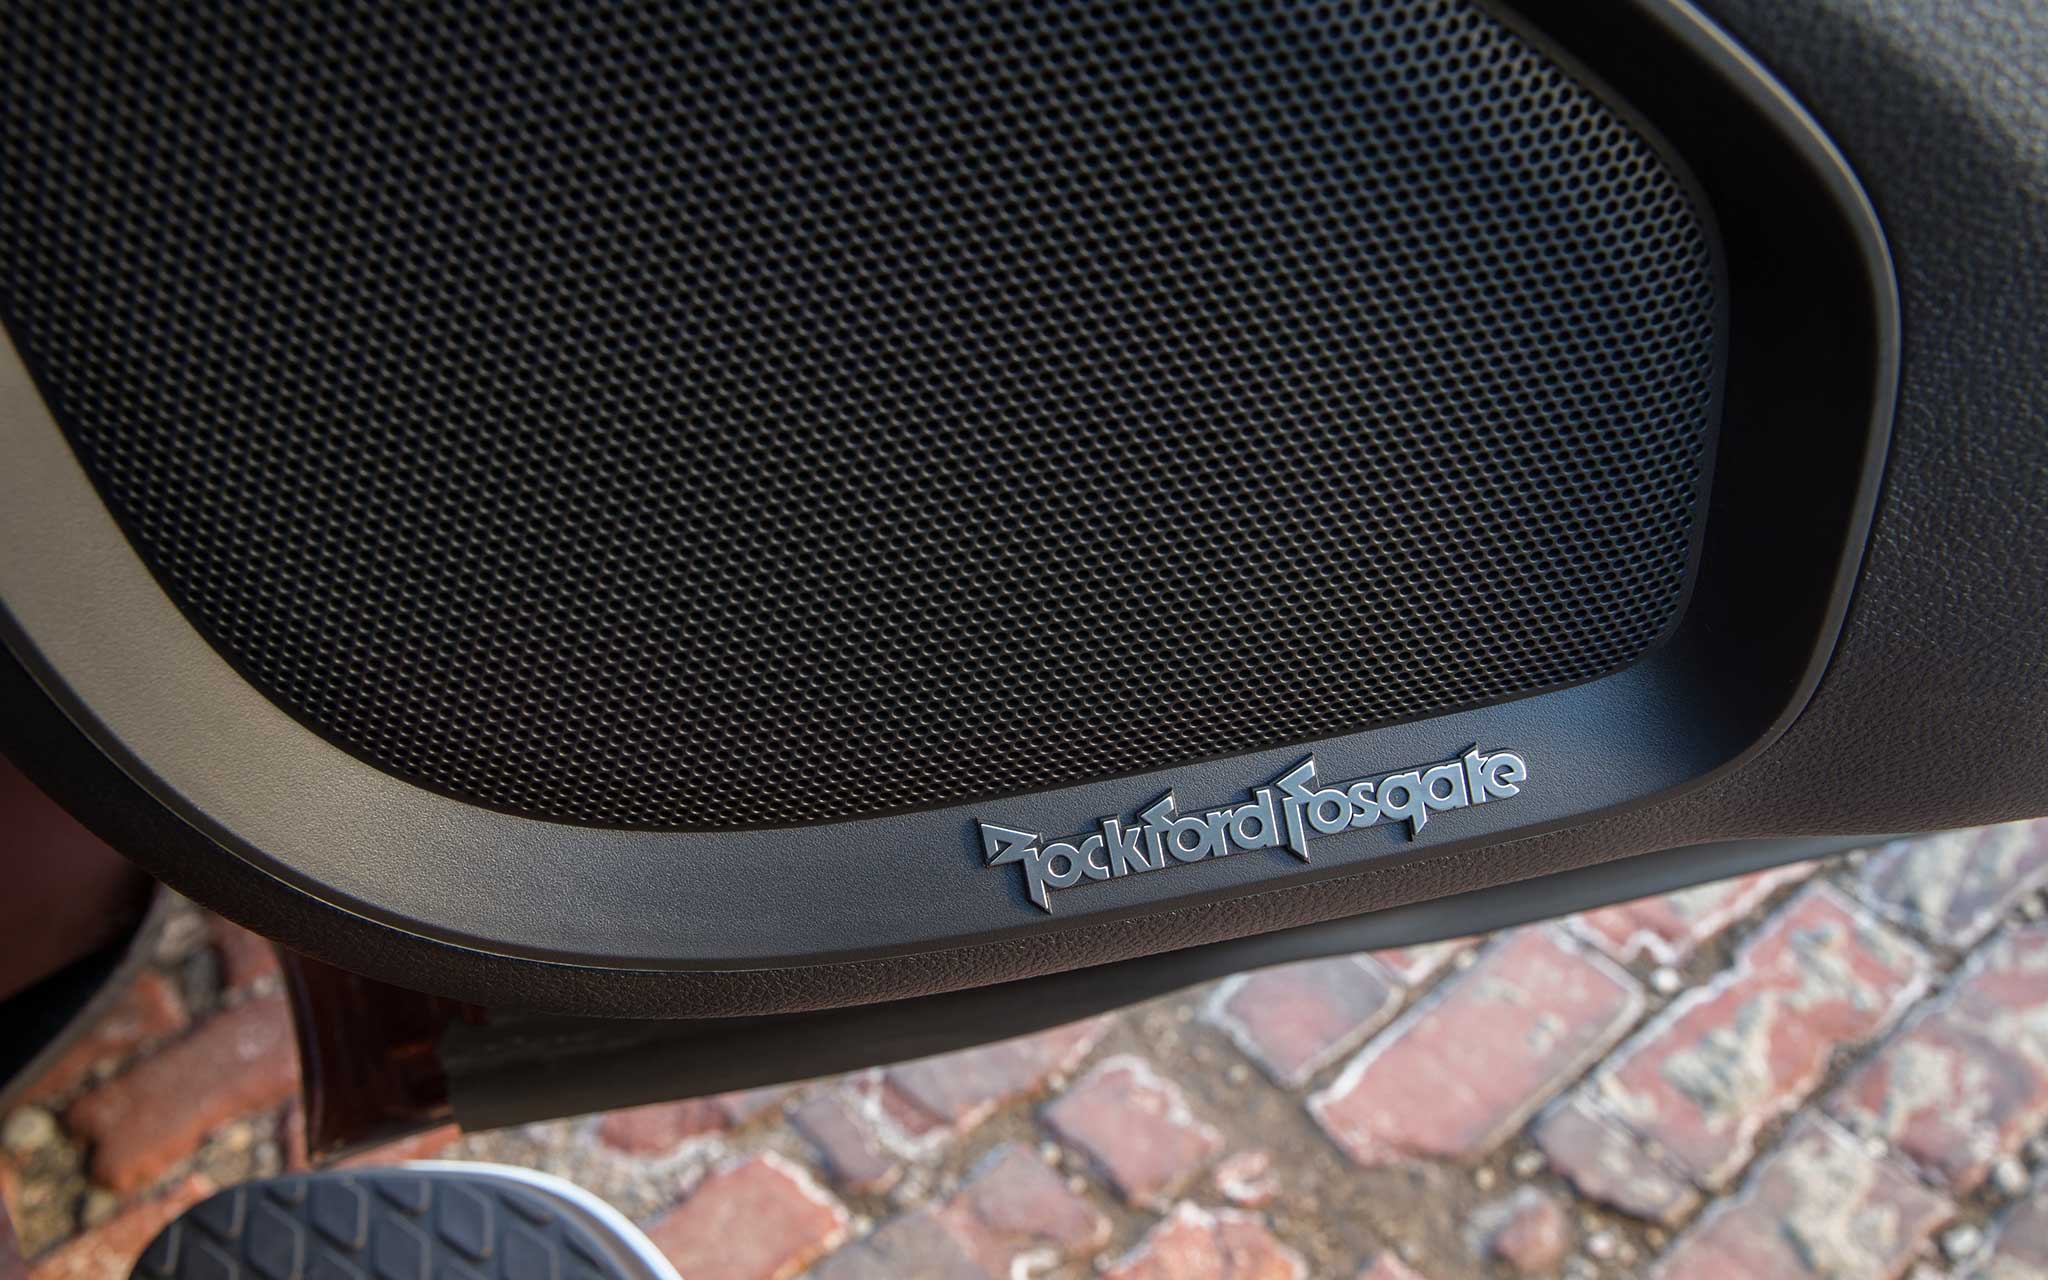 2016 Nissan Titan Rockford Fosgate Speaker Detail.